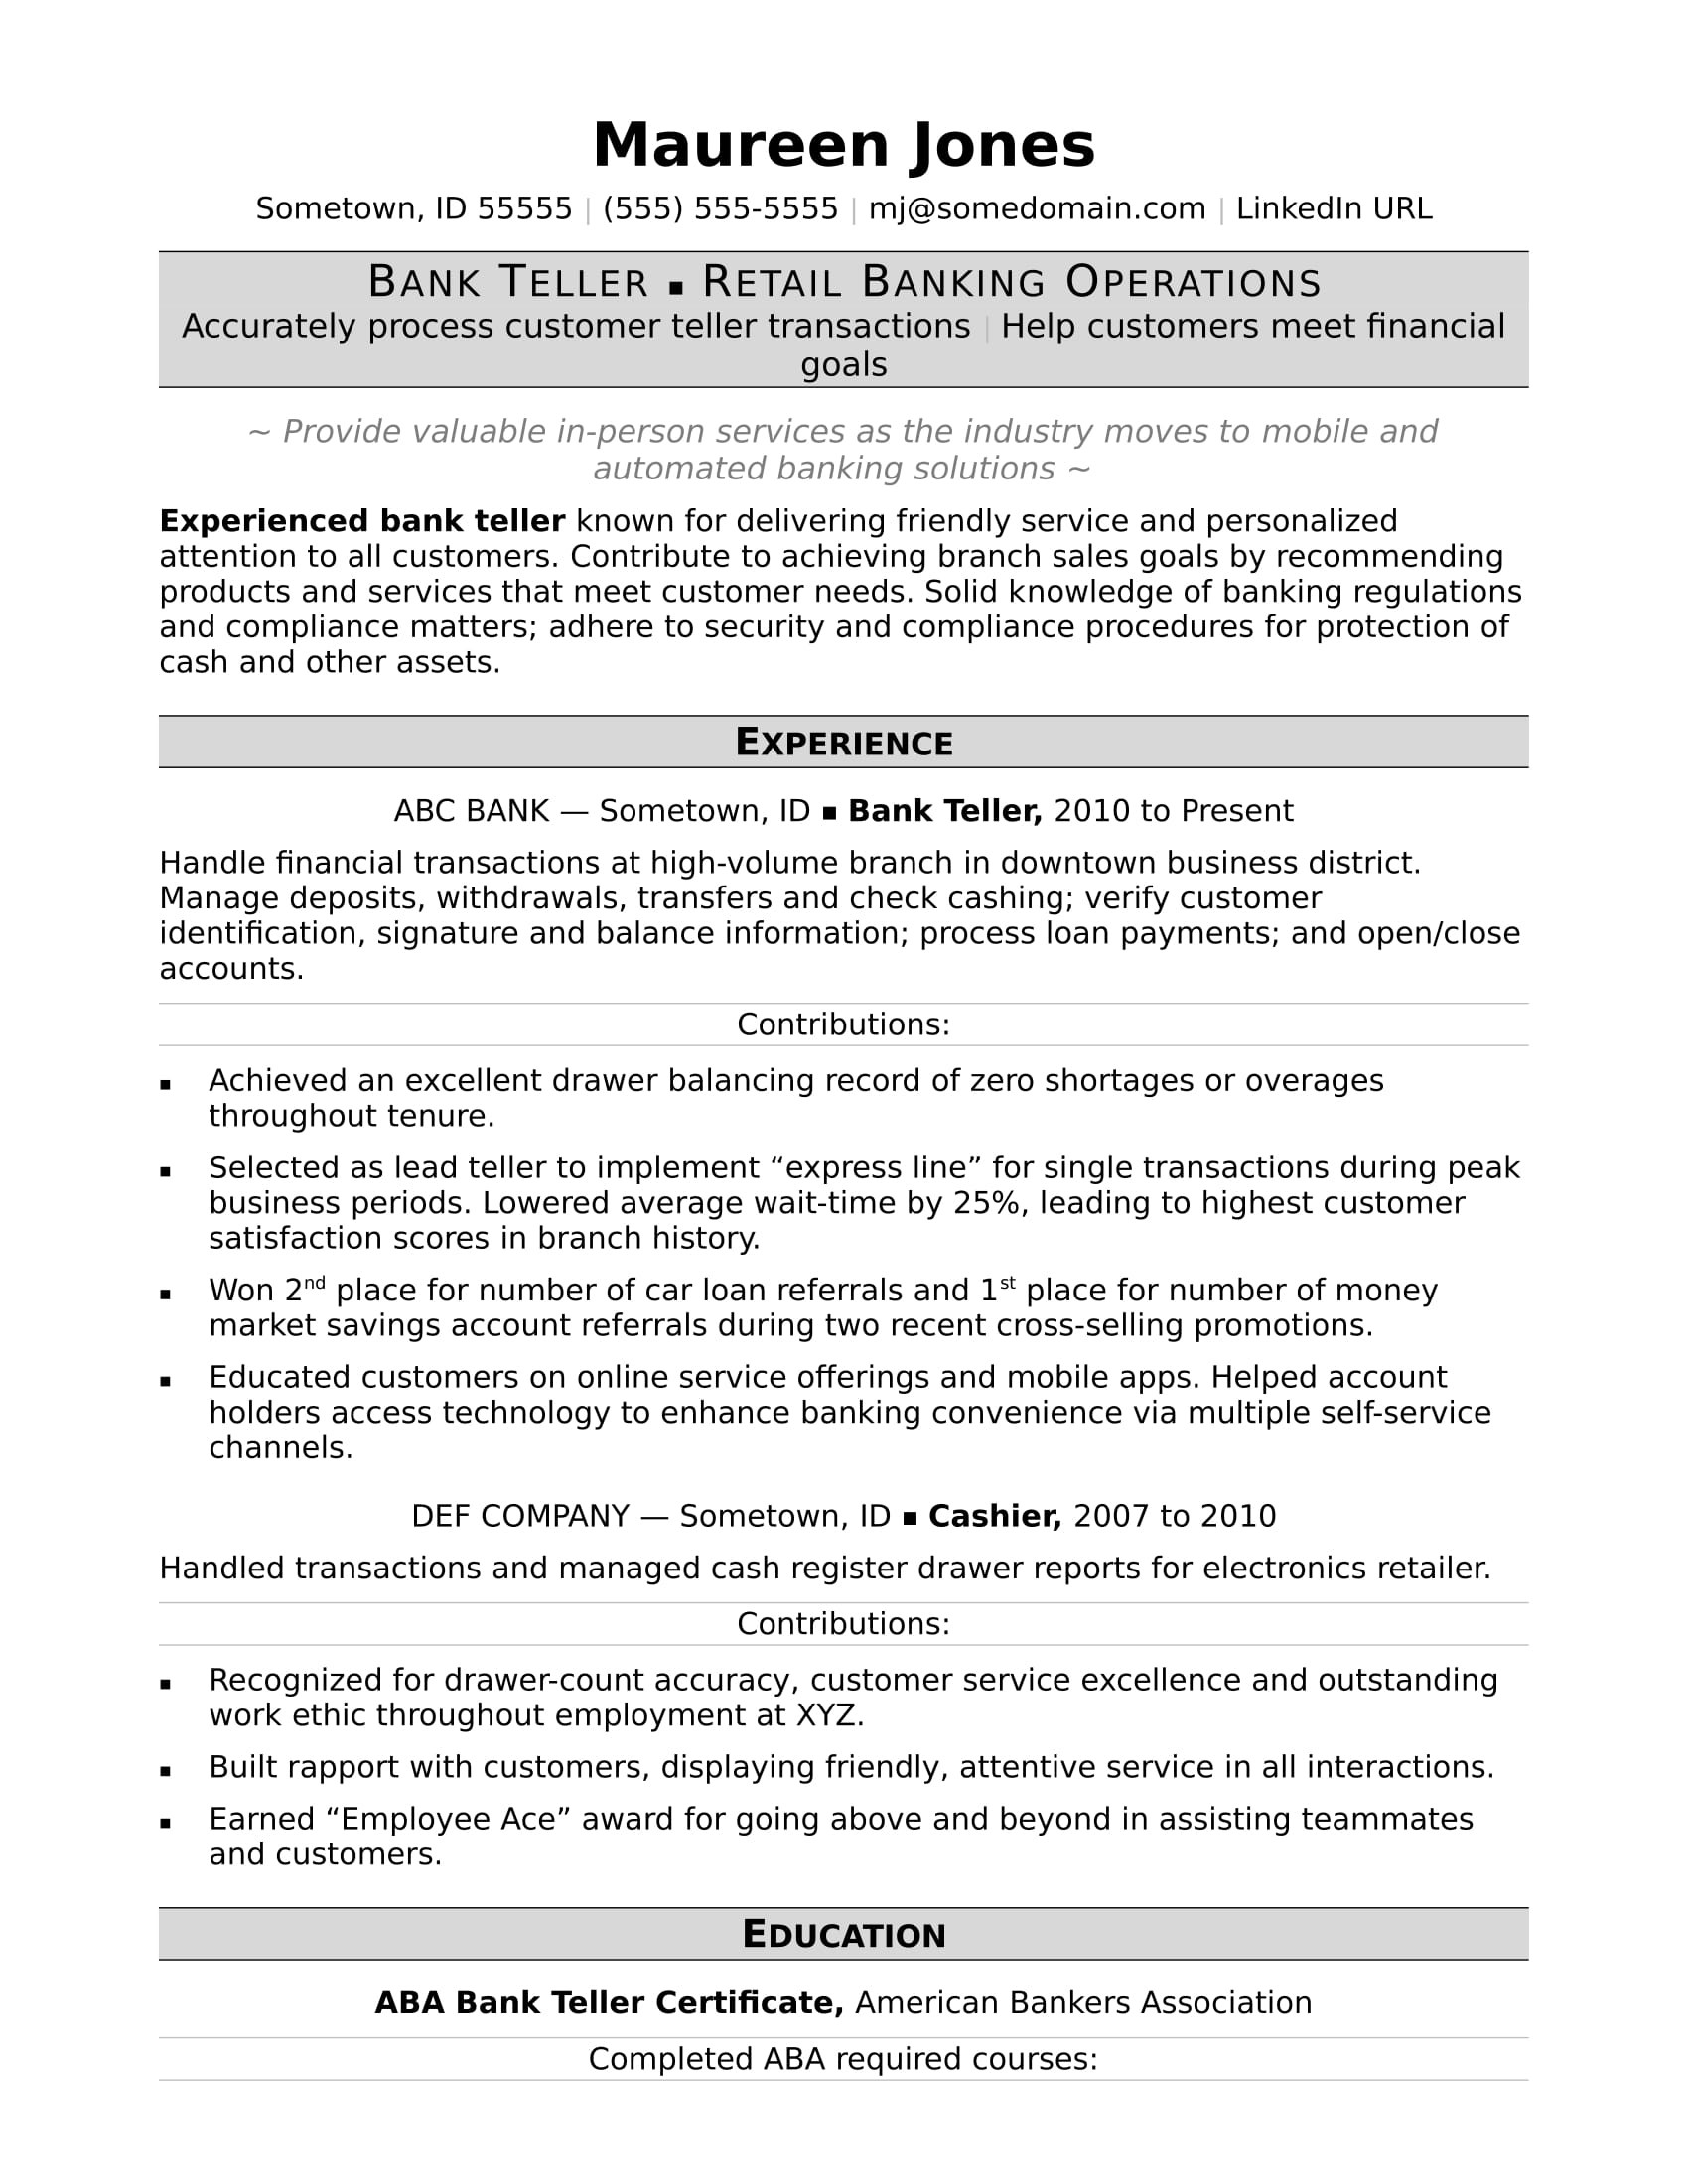 Sample Resume for Bank Clerk Jobs with No Experience Bank Teller Resume Monster.com